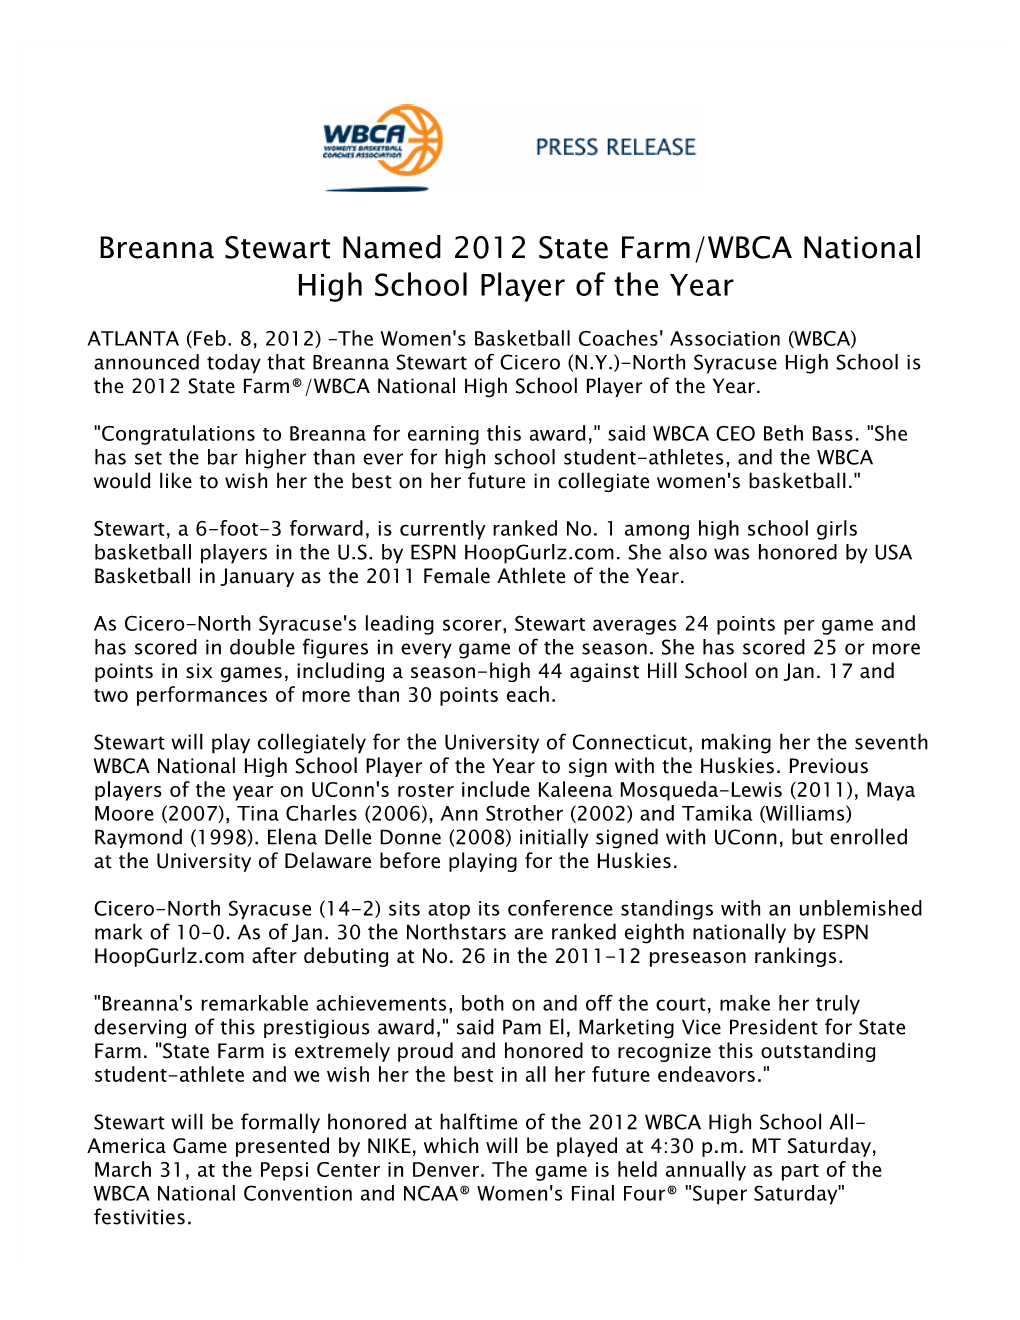 Breanna Stewart Named 2012 State Farm/WBCA National High School Player of the Year